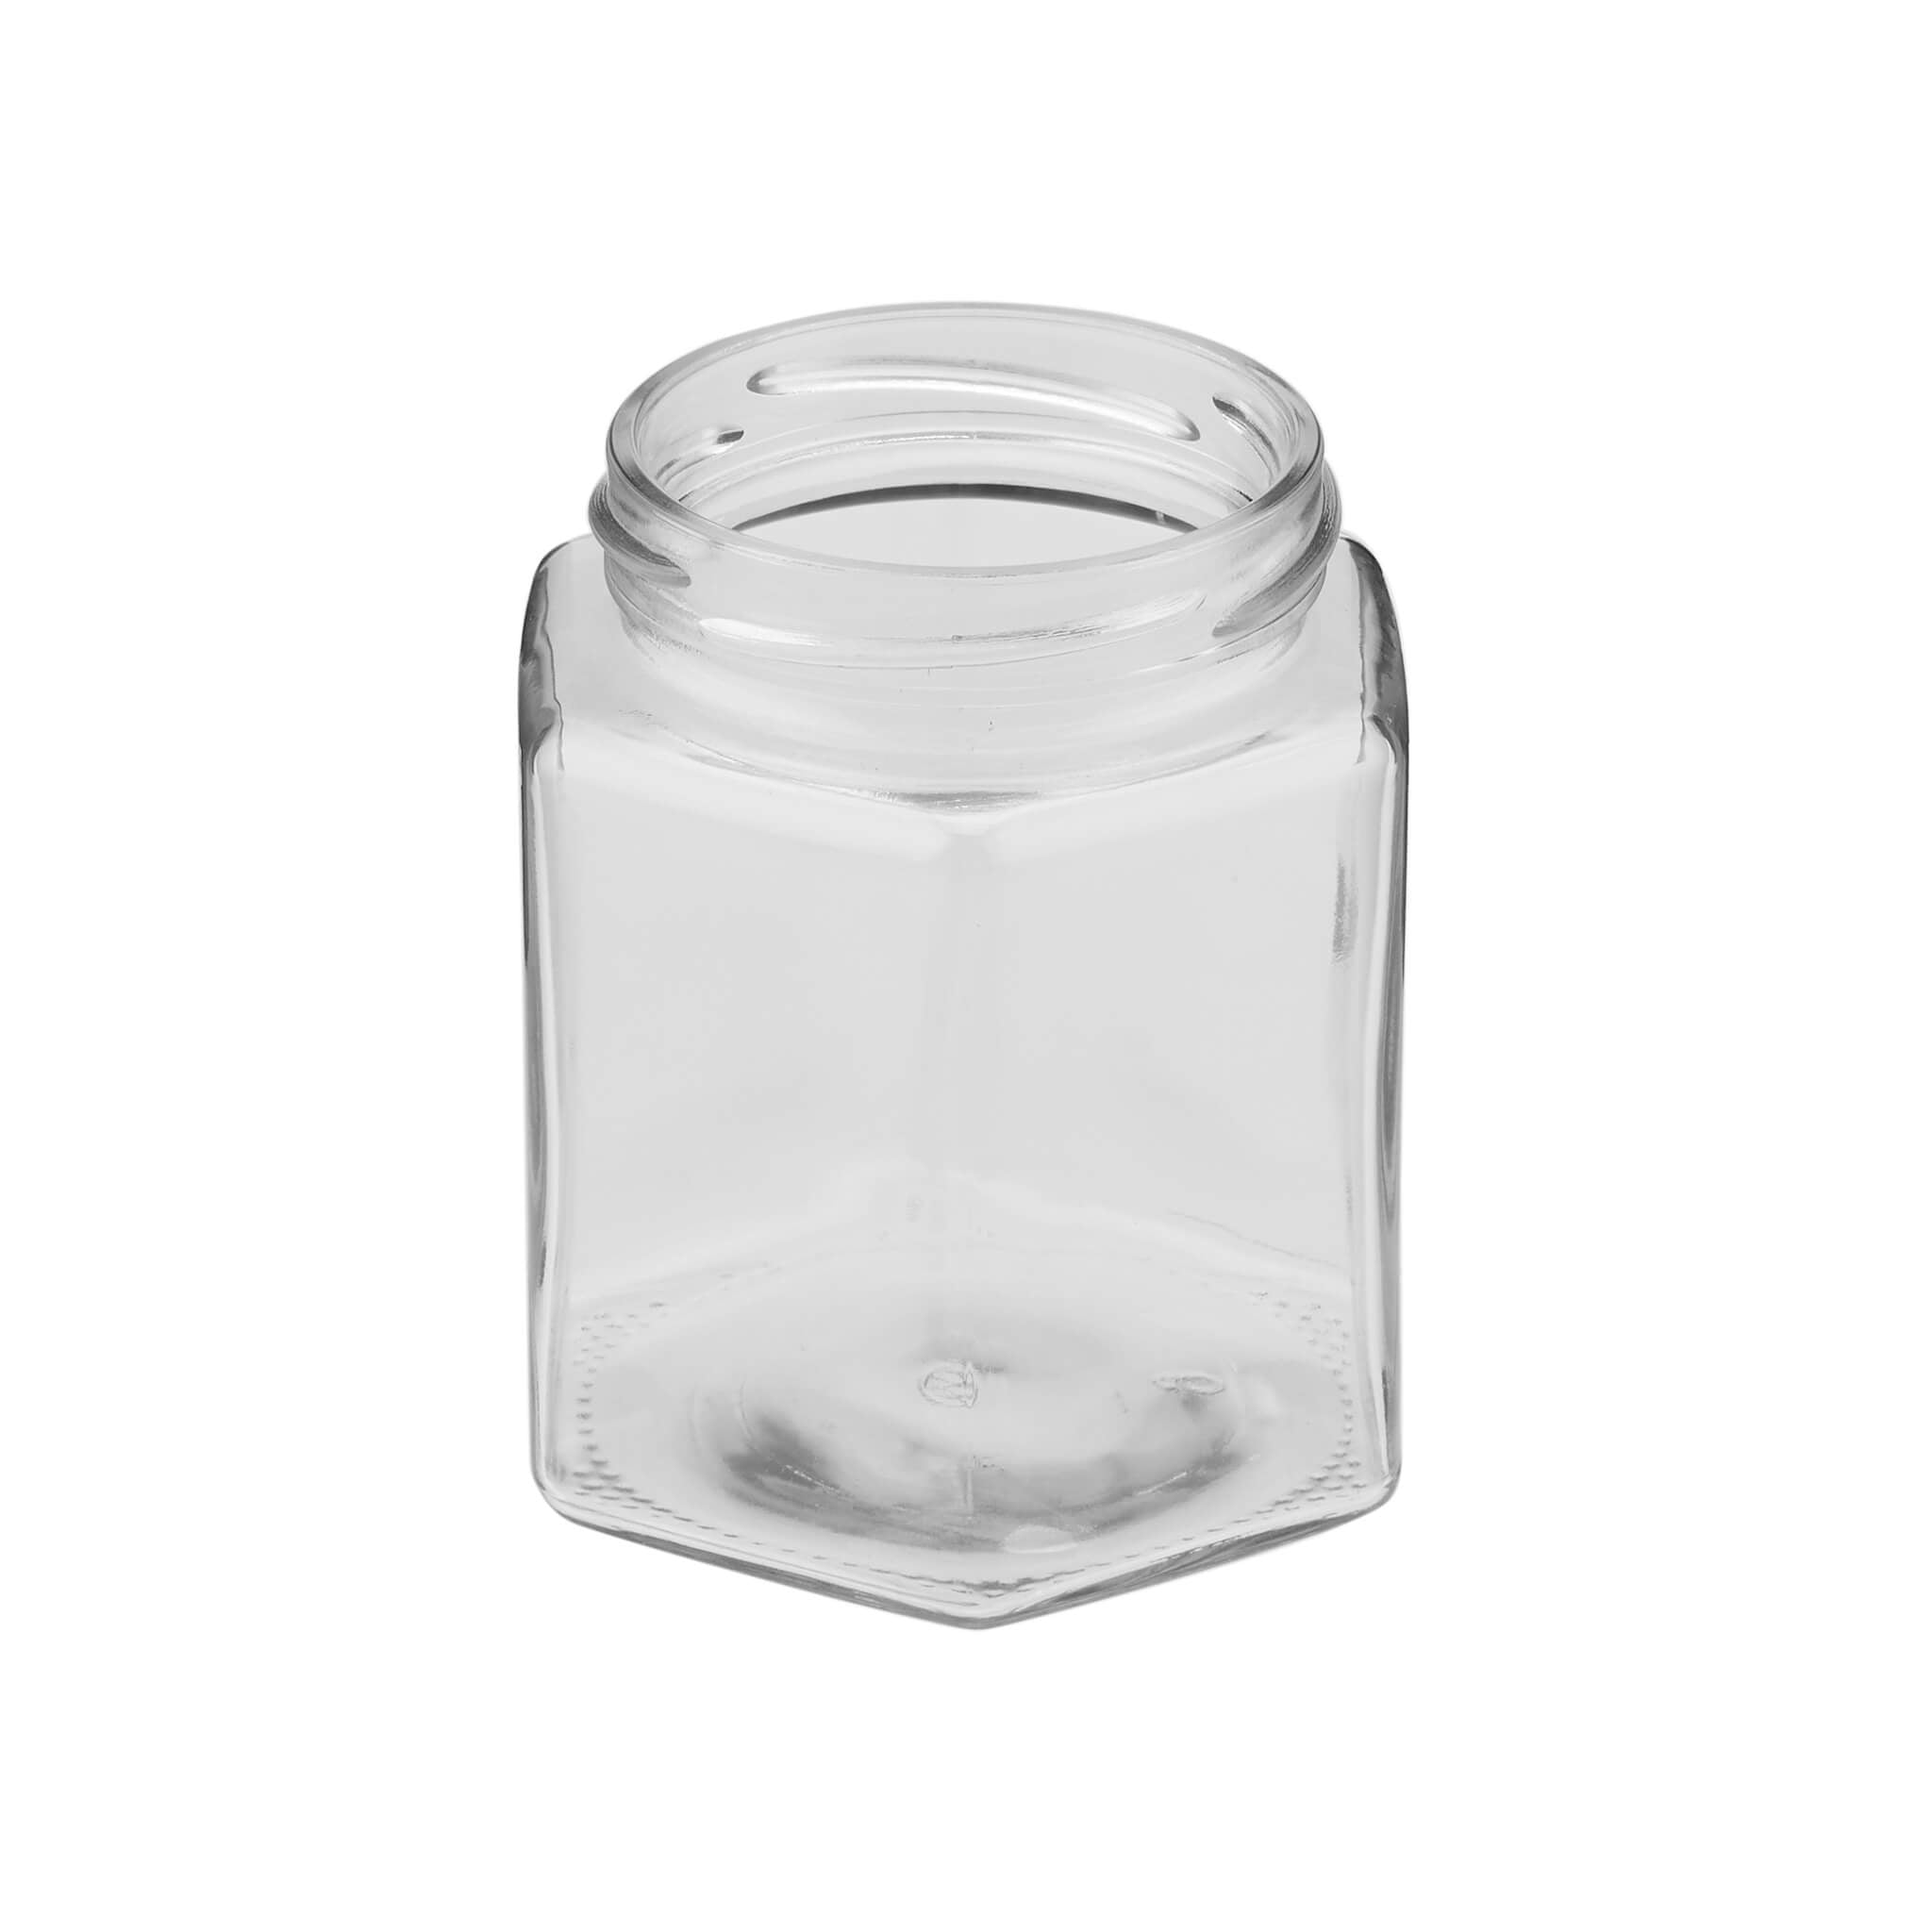 Hexagonal Glass Jar - Hotpack Global